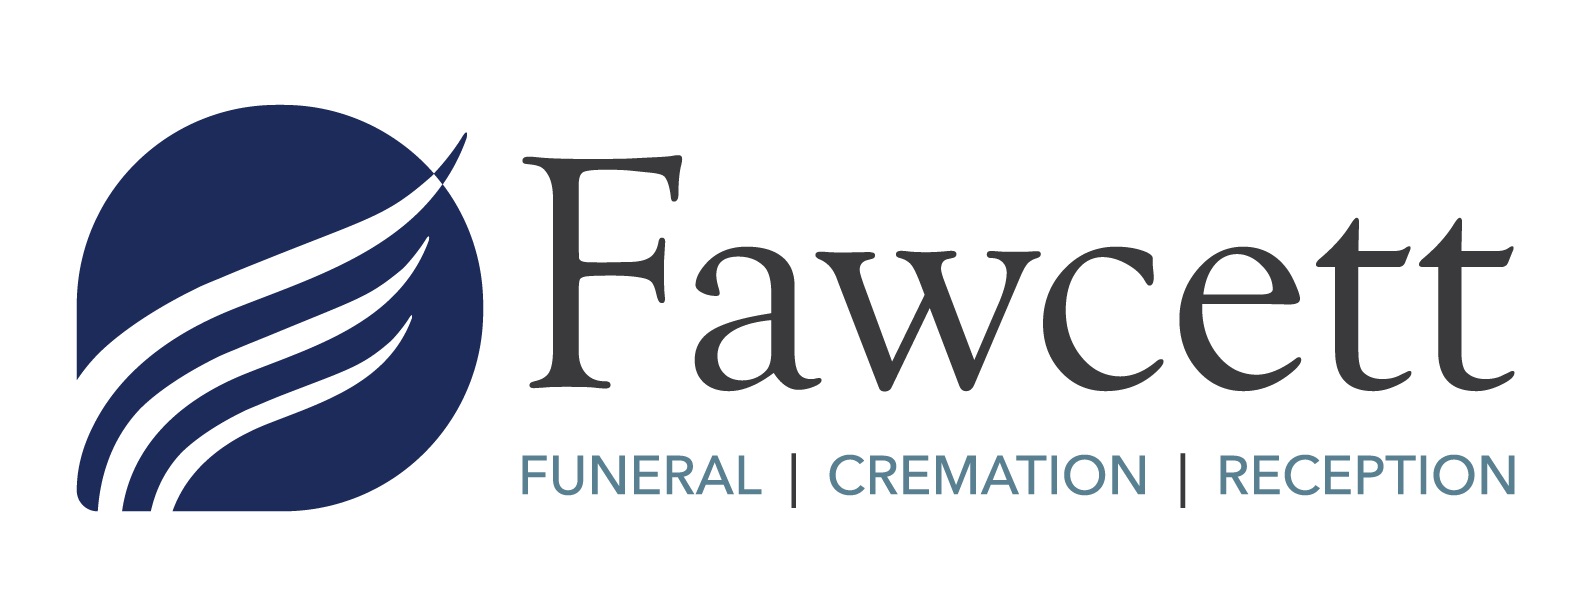 Fawcett Funeral Cremation 